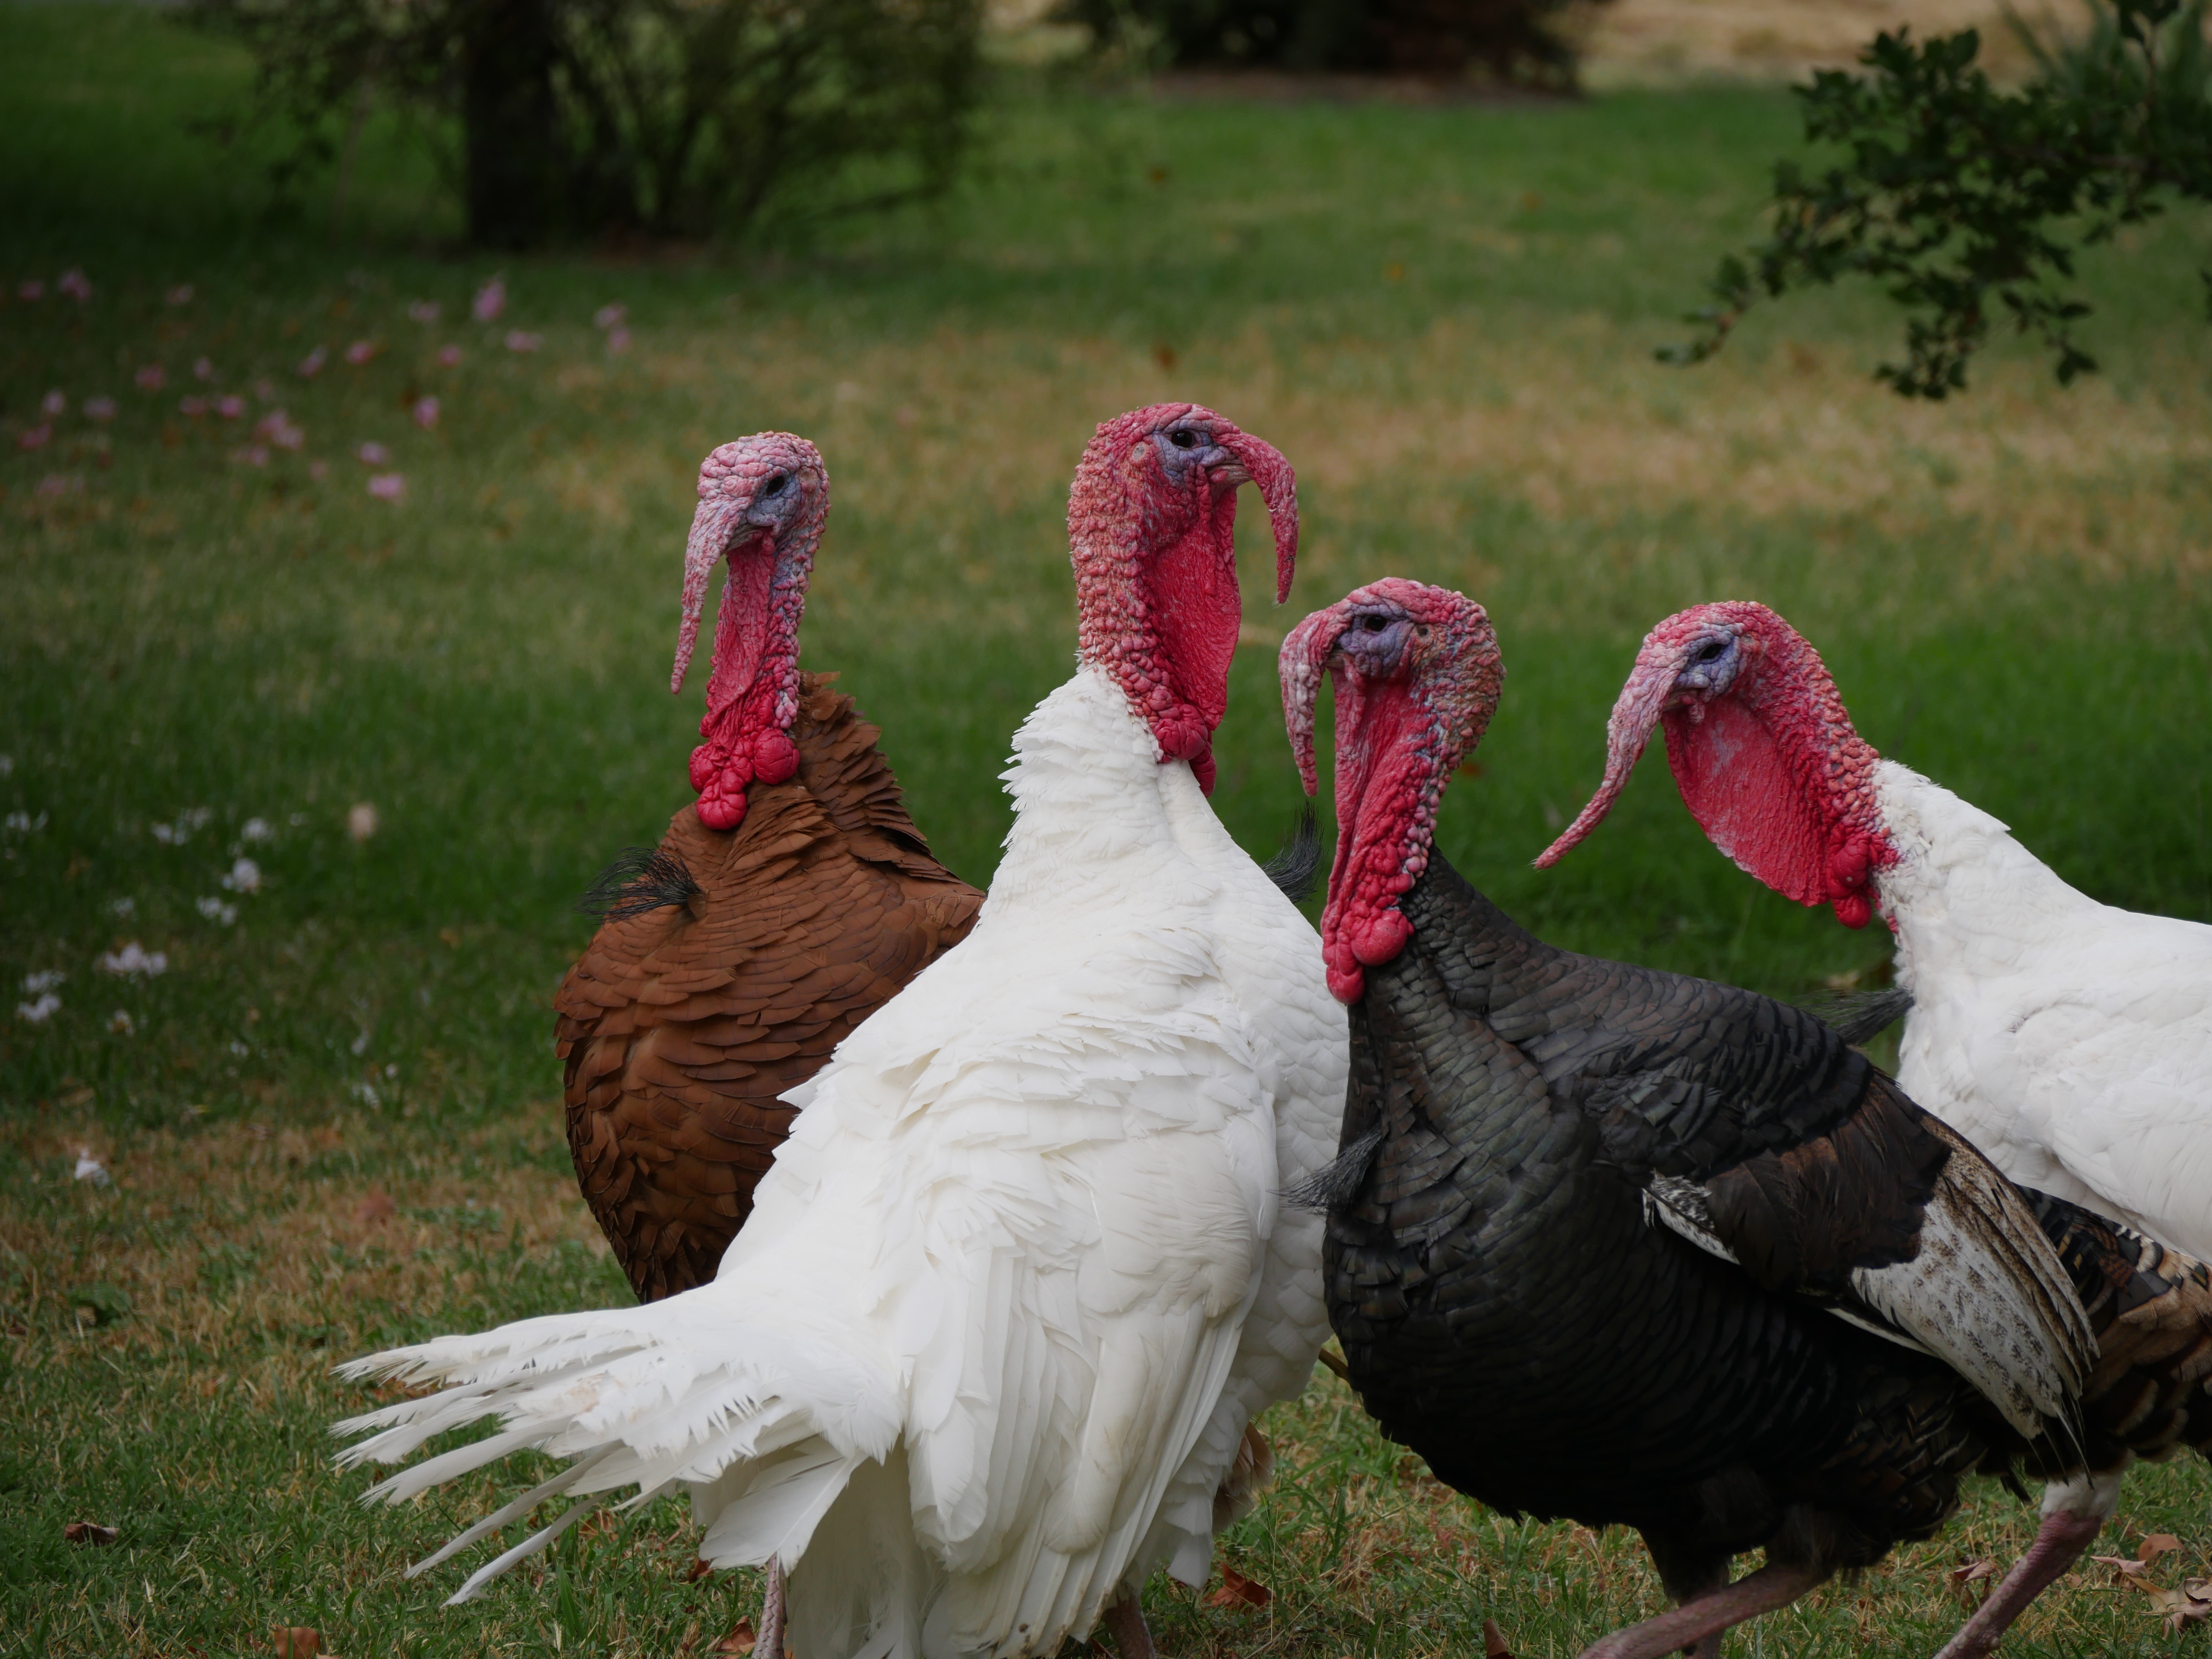 Four turkeys